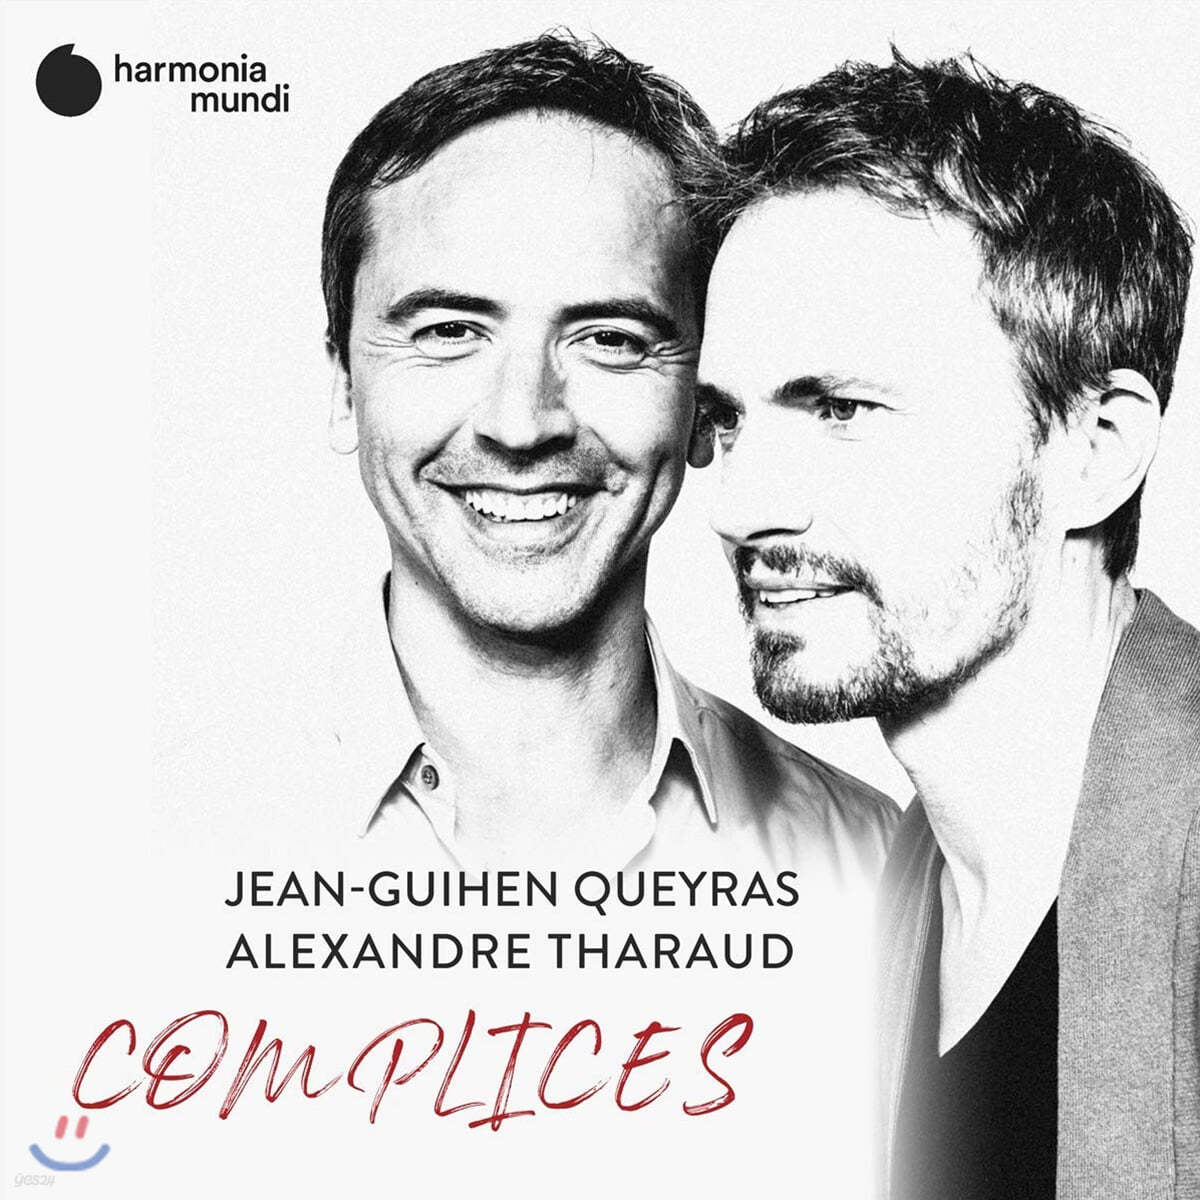 Jean Guihen Queyras / Alexandre Tharaud 첼로와 피아노를 위한 소품 모음집 - 장-기엔 케라스, 알렉산드르 타로 (Complices) 